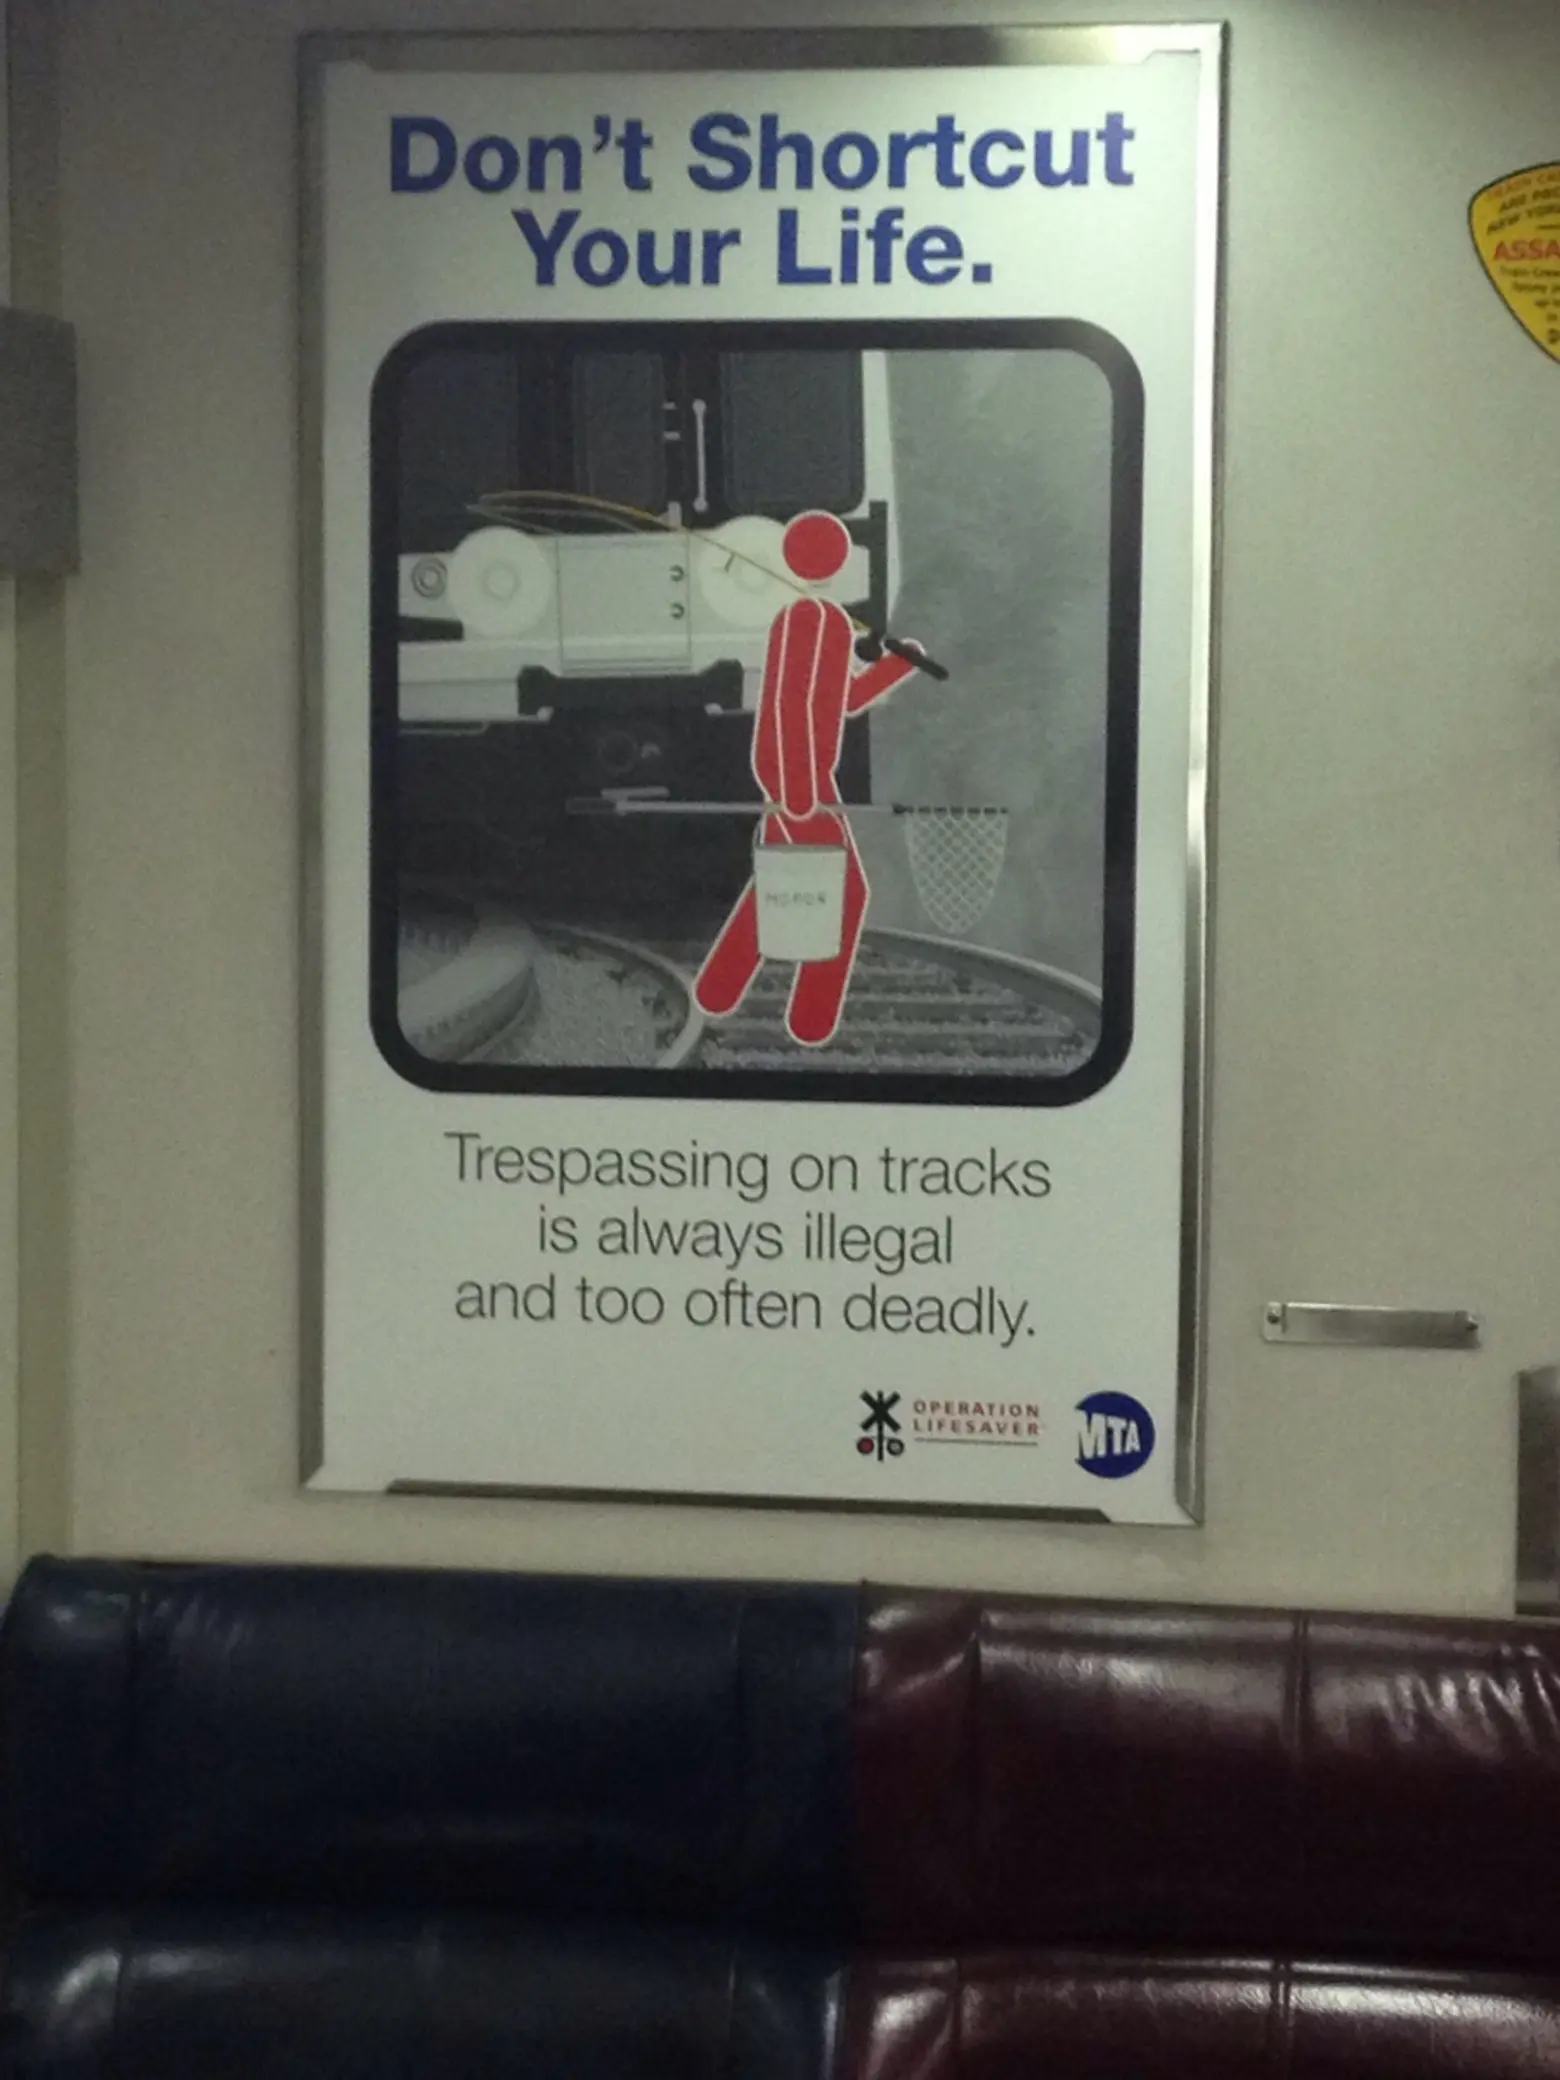 MTA operation lifesaver campaign 